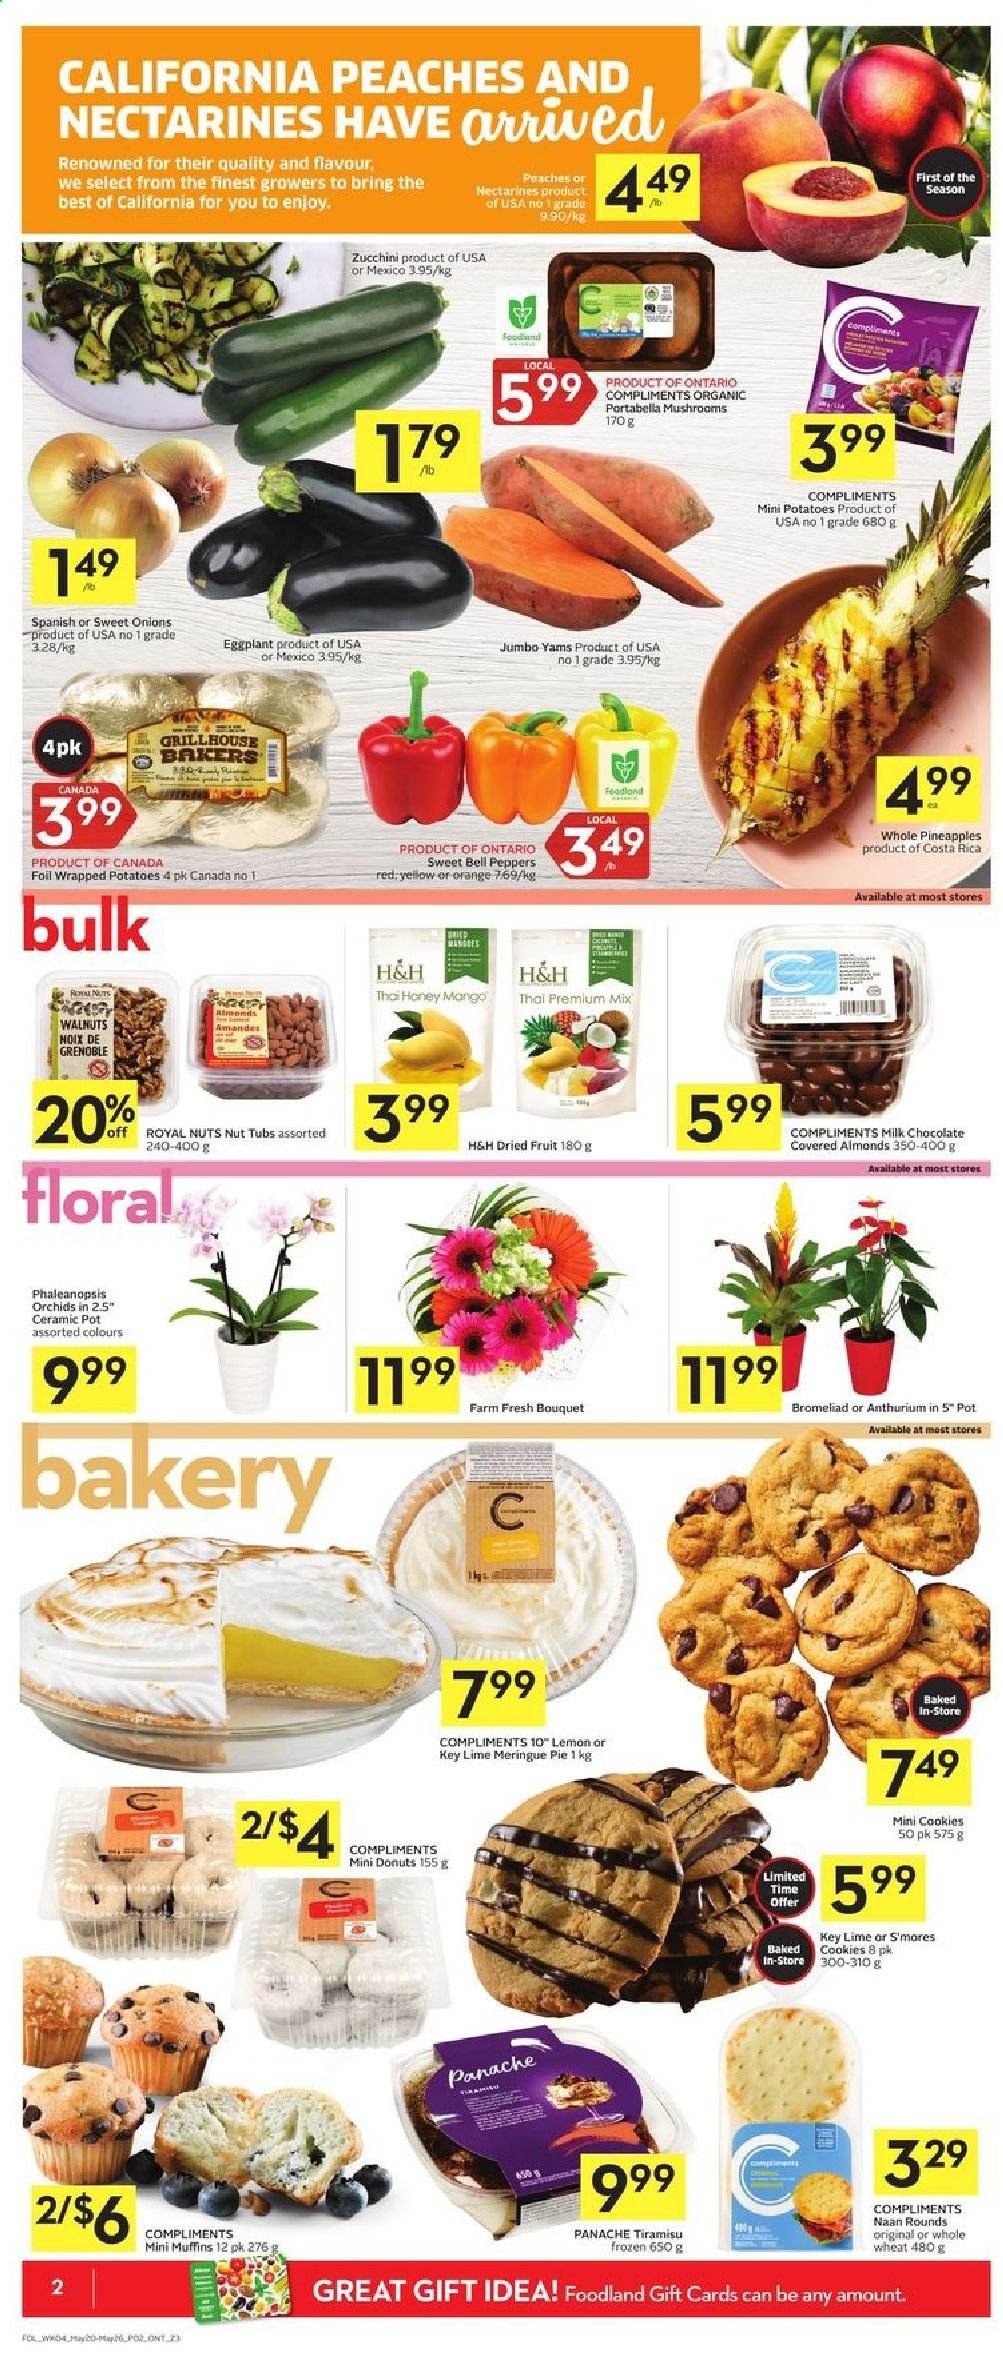 thumbnail - Circulaire Foodland - 20 Mai 2021 - 26 Mai 2021 - Produits soldés - nectarine, cookies, amandes. Page 2.